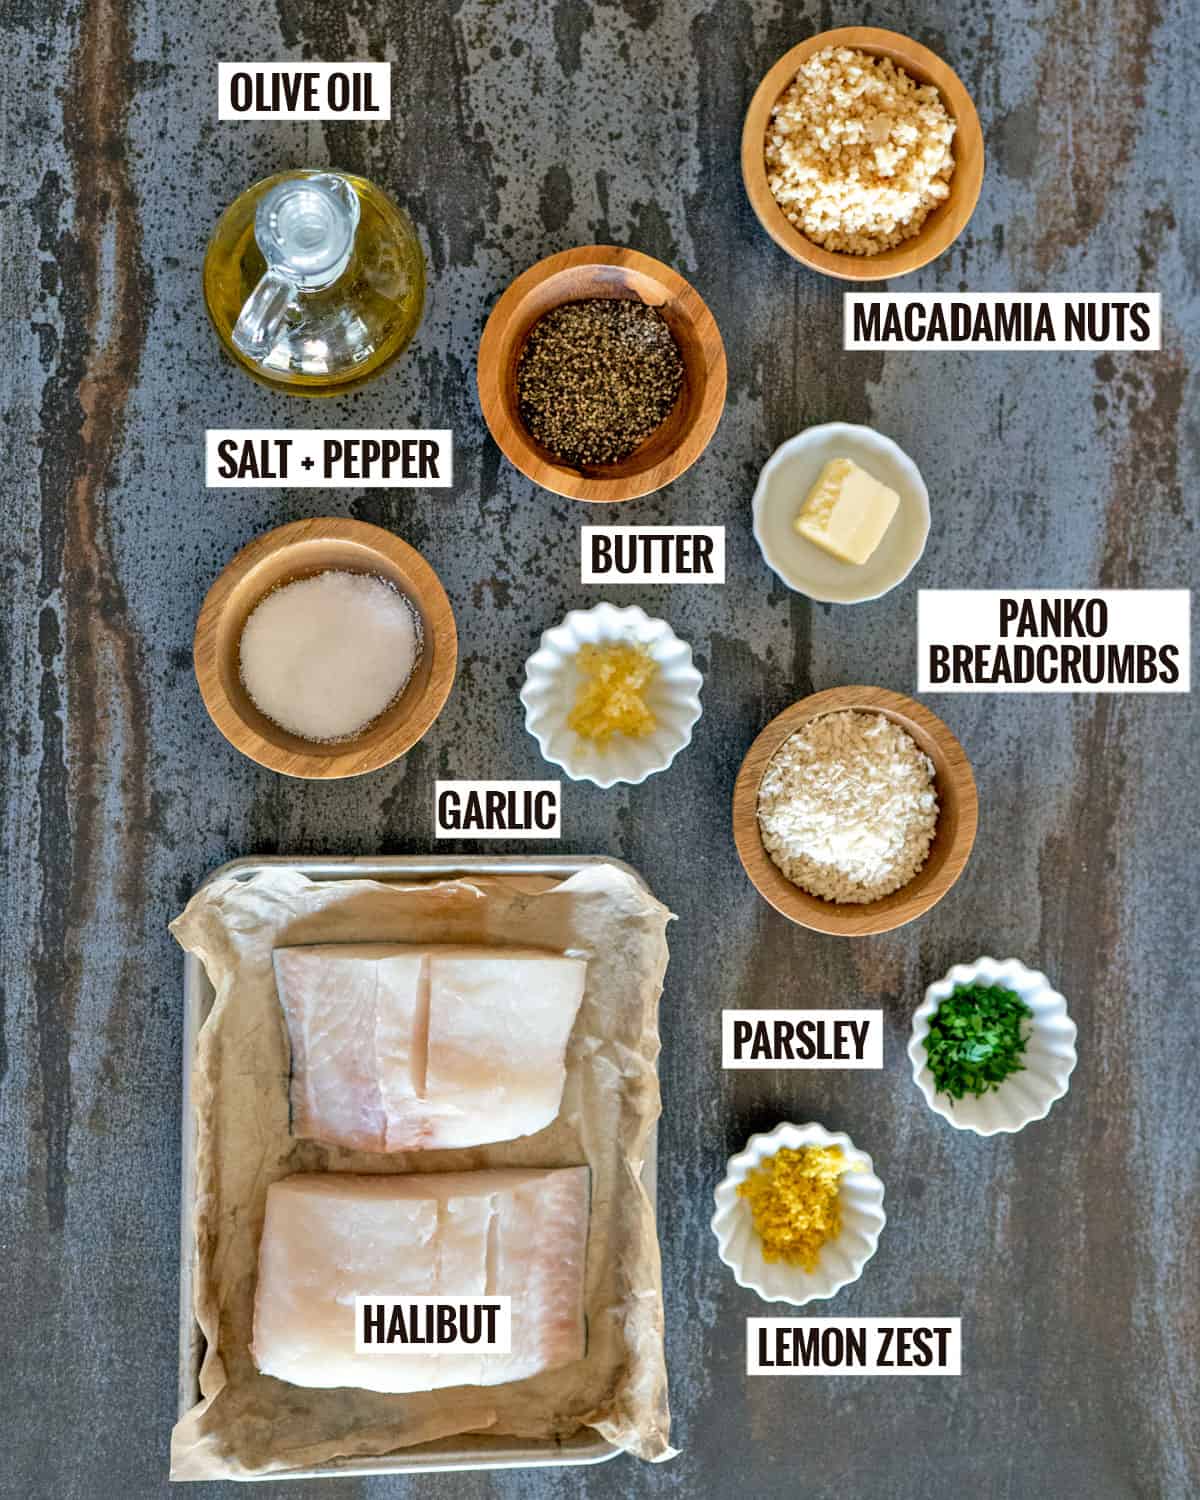 ingredients: butter, olive oil, garlic, panko, macadamia nuts, lemon, parsley, salt, pepper, halibut.